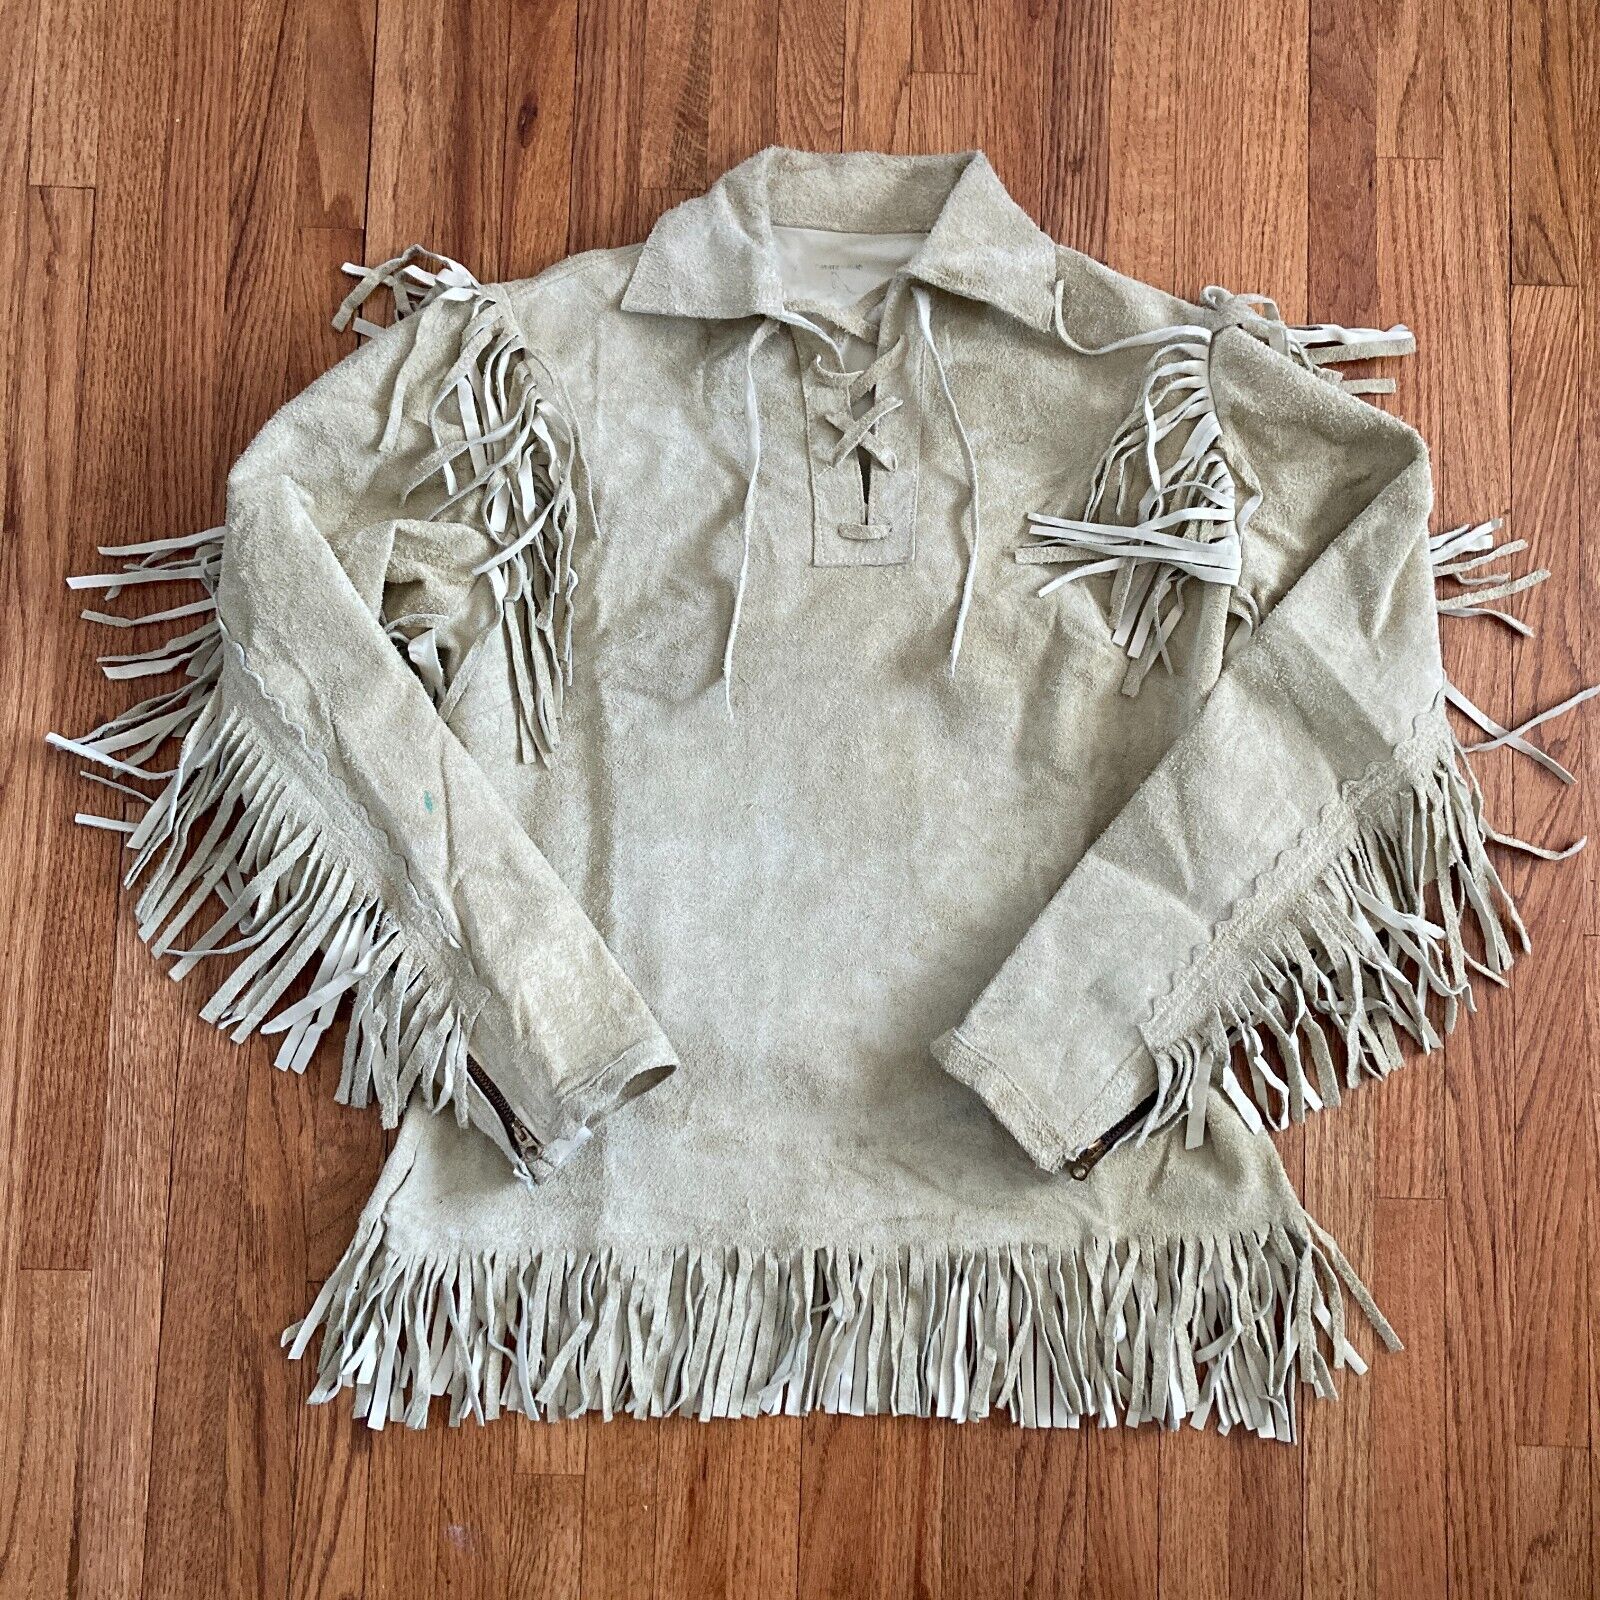 Vintage Win Fairchild Buckskin Shirt 1960s • Native American •Mountain• 1 Owner